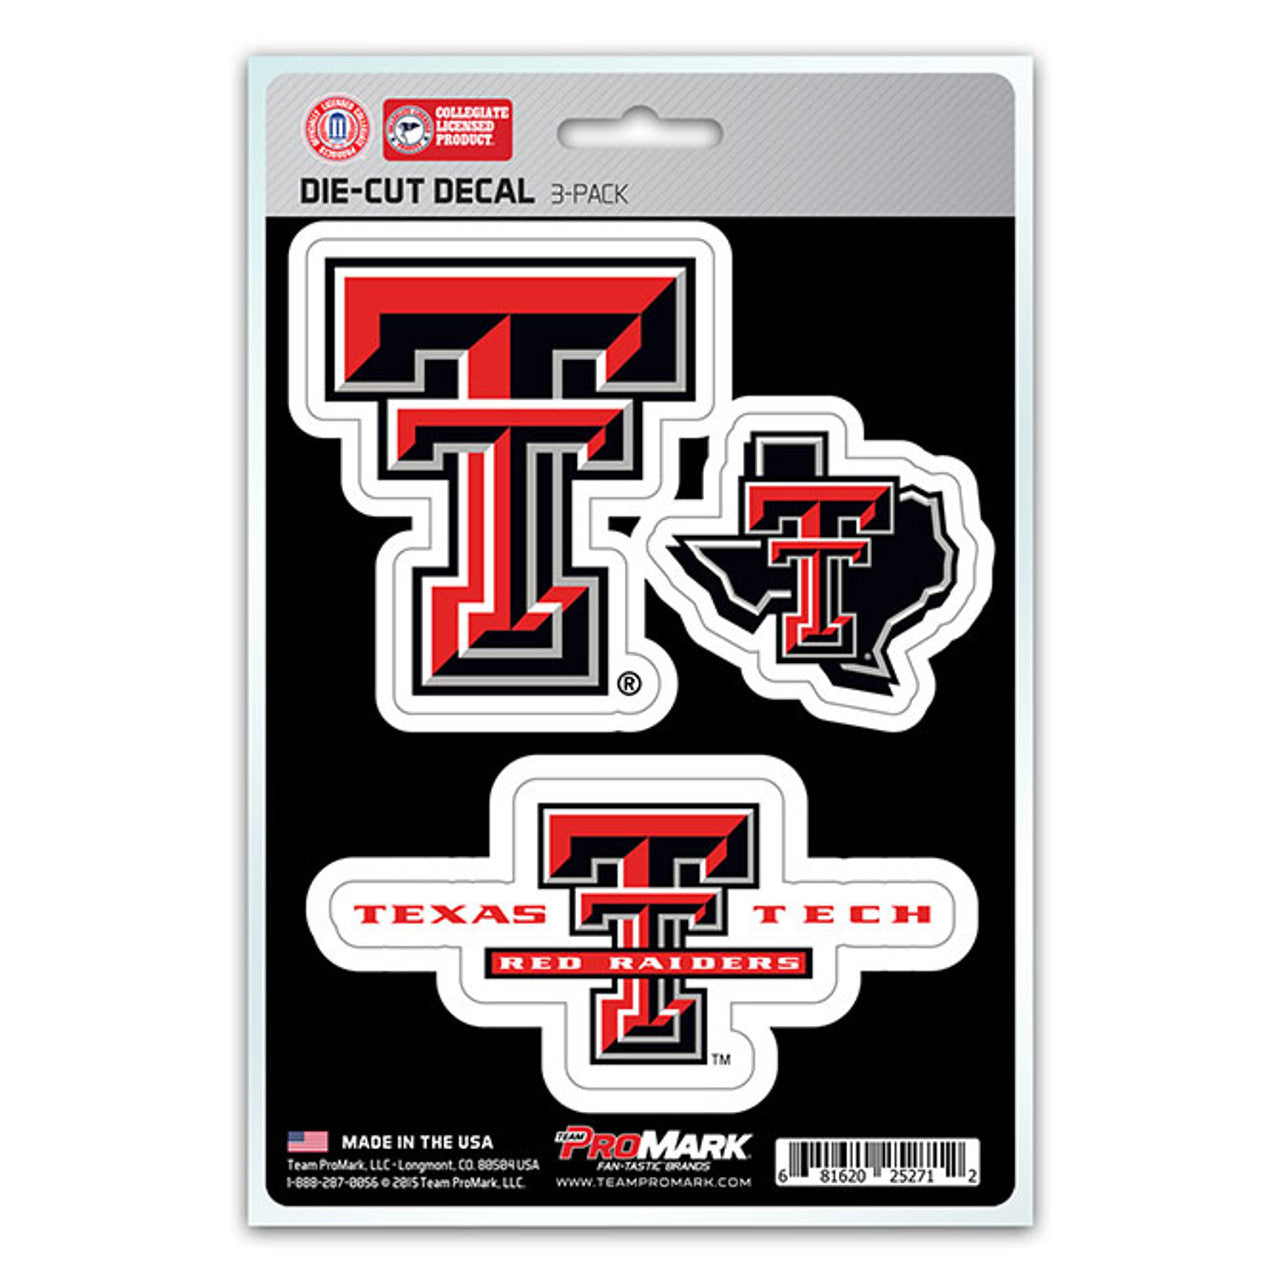 Texas Tech Red Raiders 3 pack Die Cut Team Decals by Team Promark